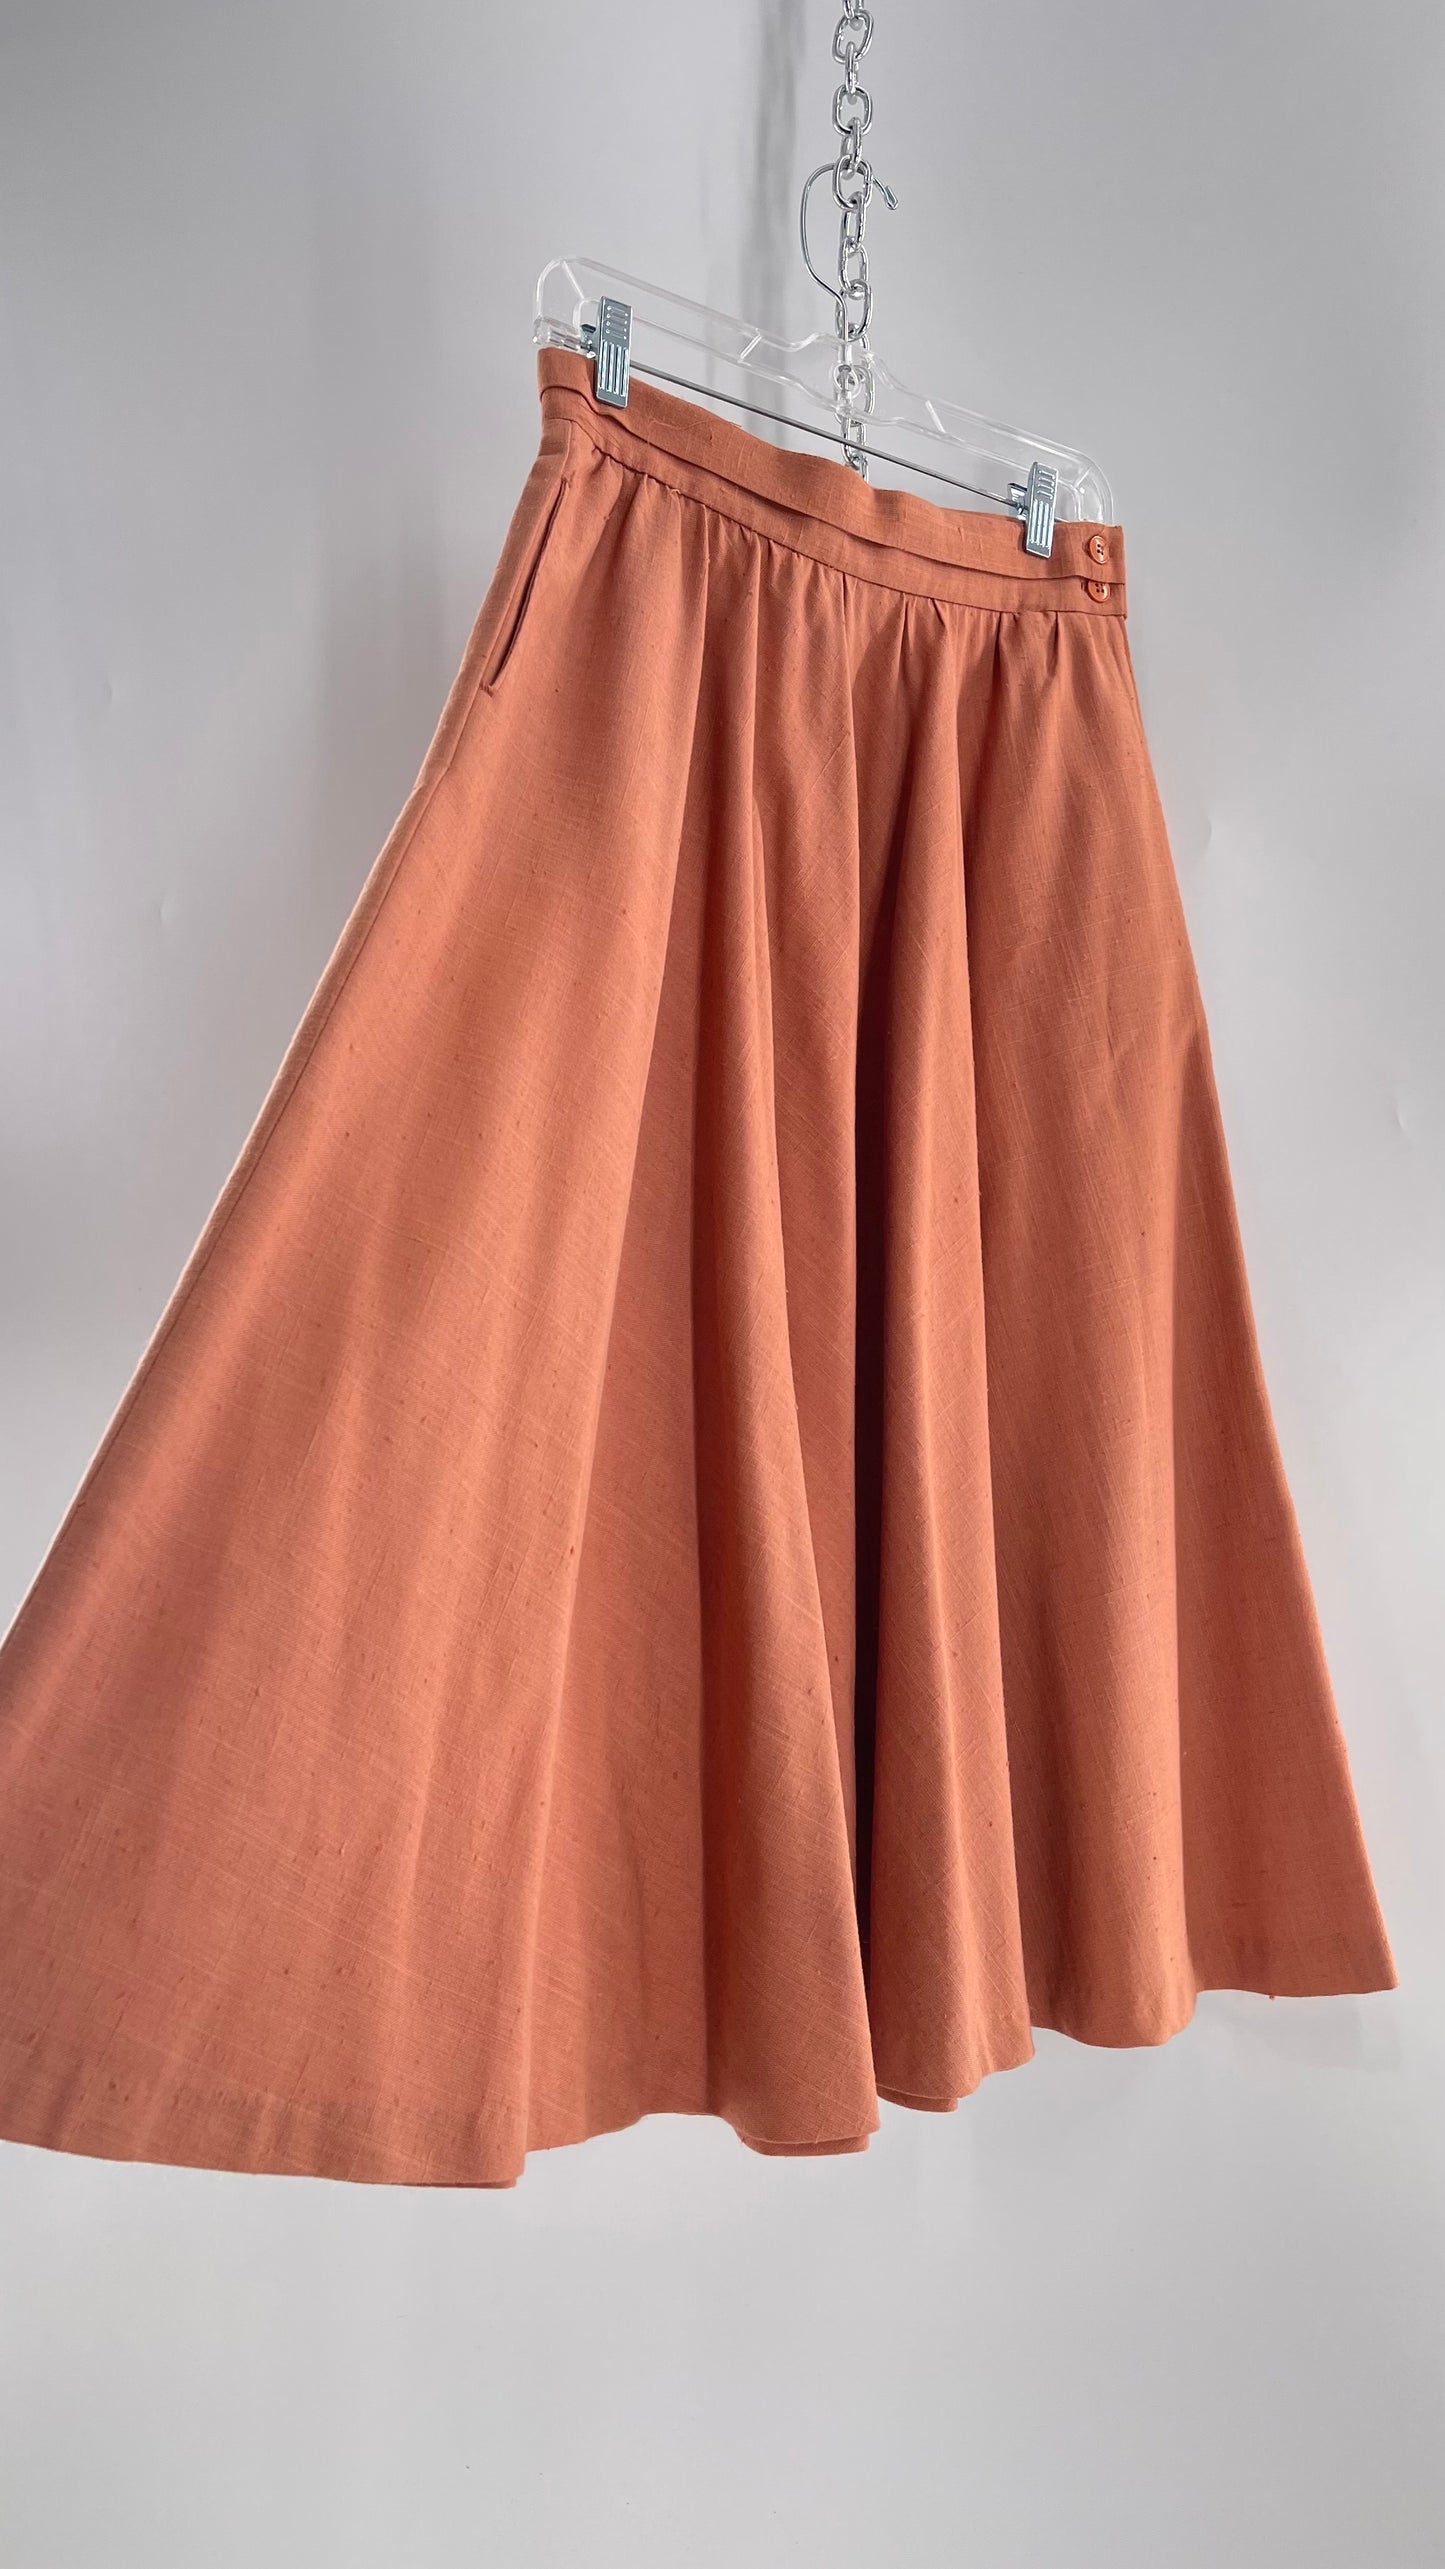 Vintage David N Linen Look Apricot Pink/Orange Circle Skirt with Pockets (9/10)